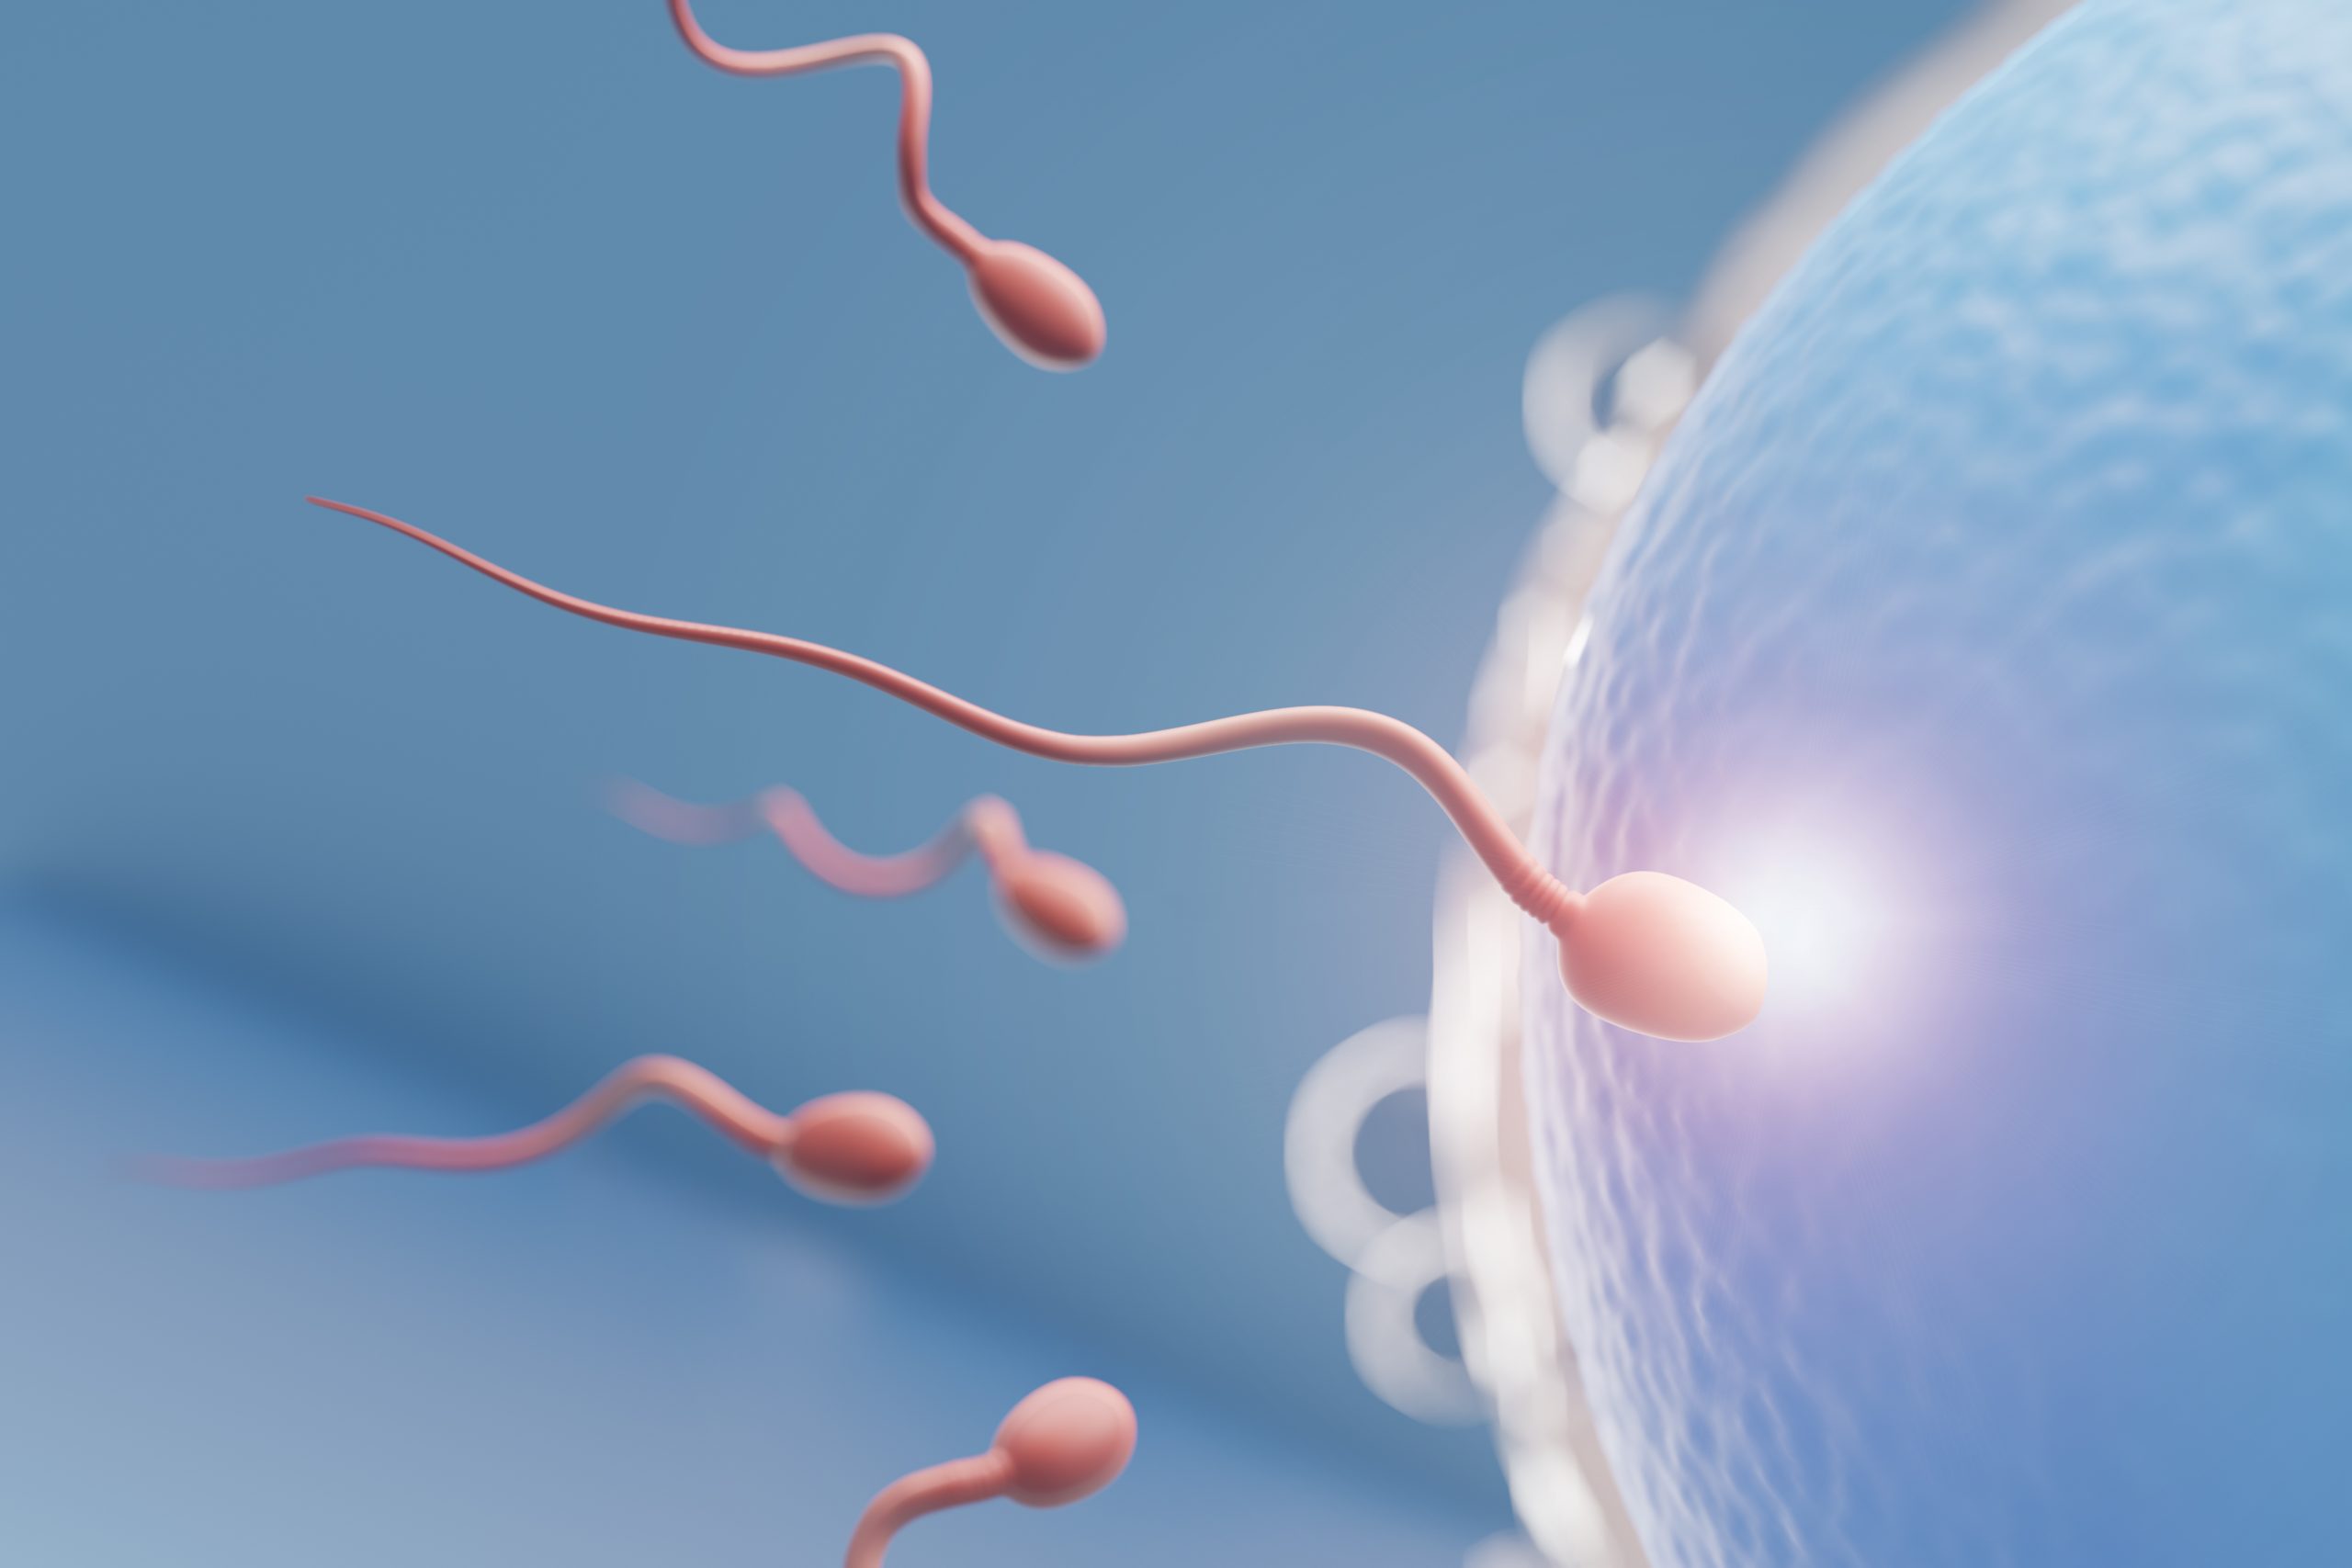 сперма во влагалище у детей фото 15